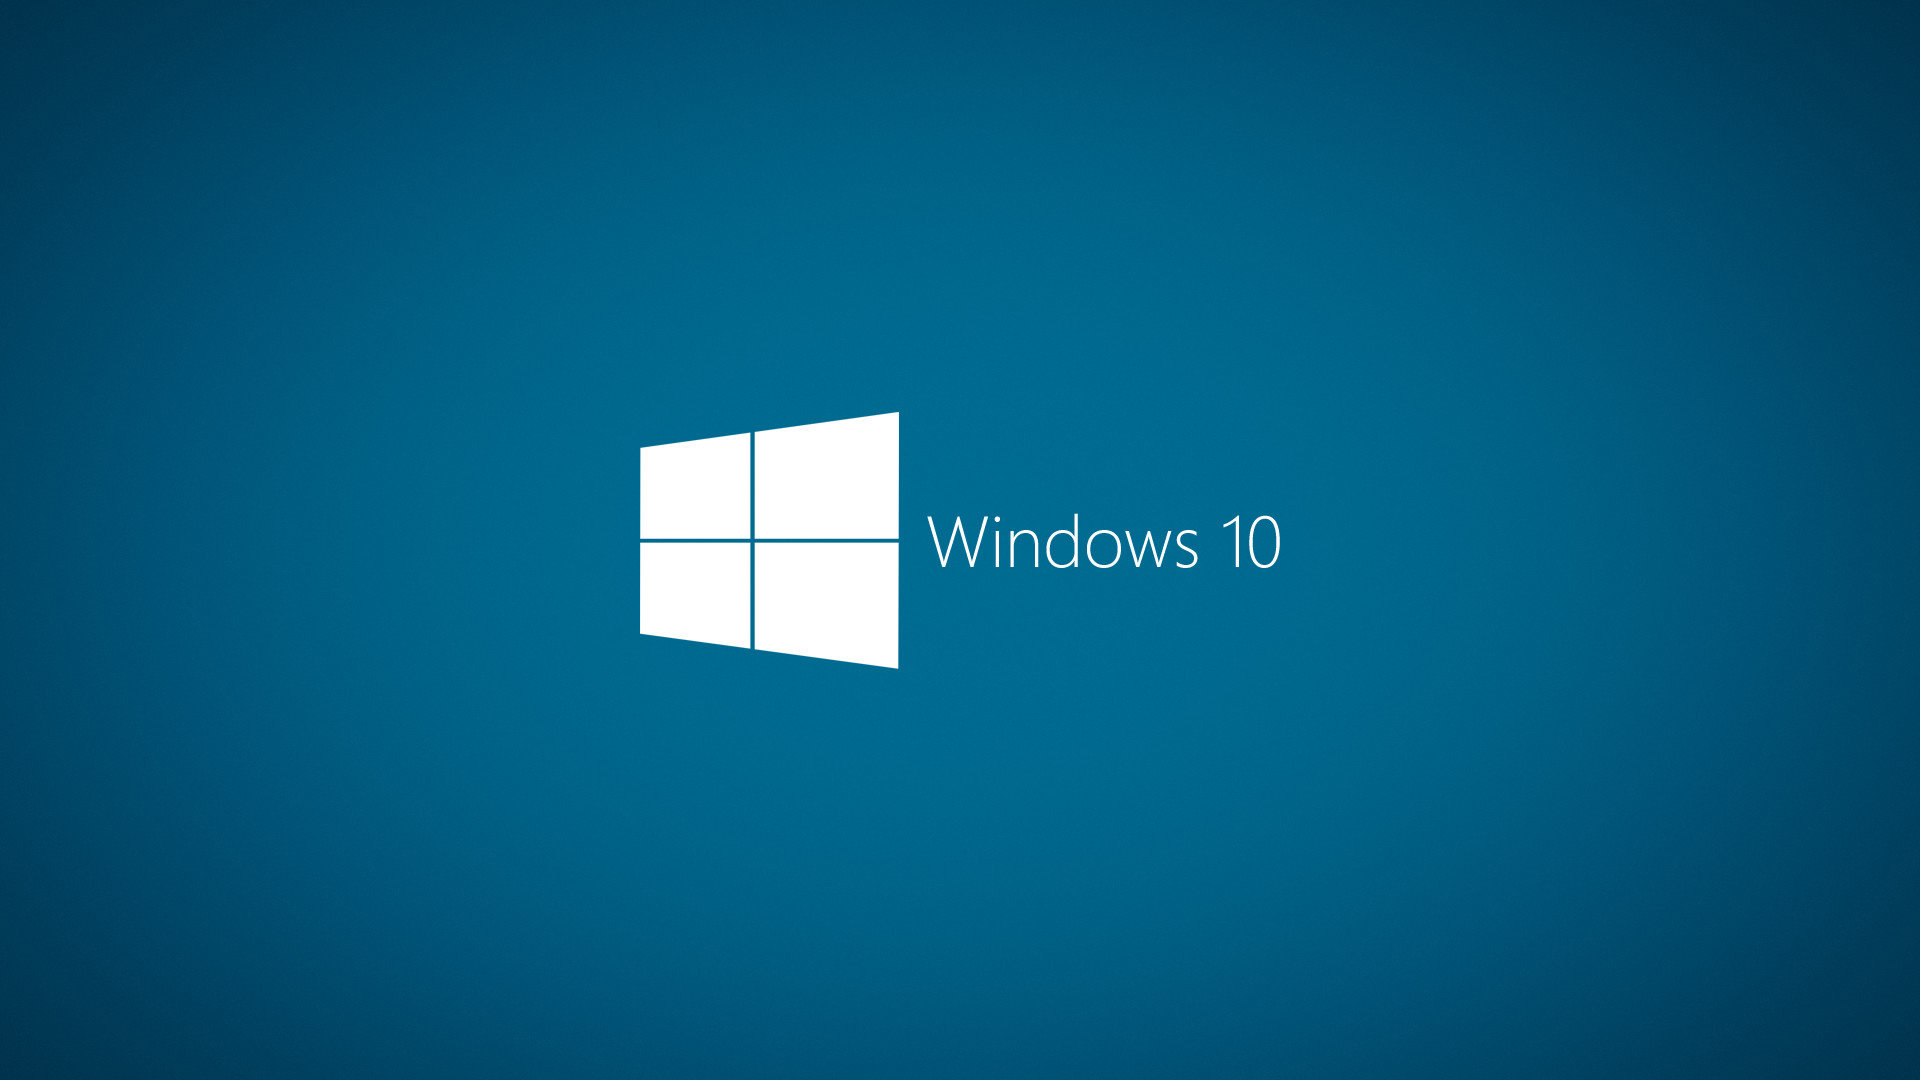 Windows 10 free wallpaper ID:130303 for